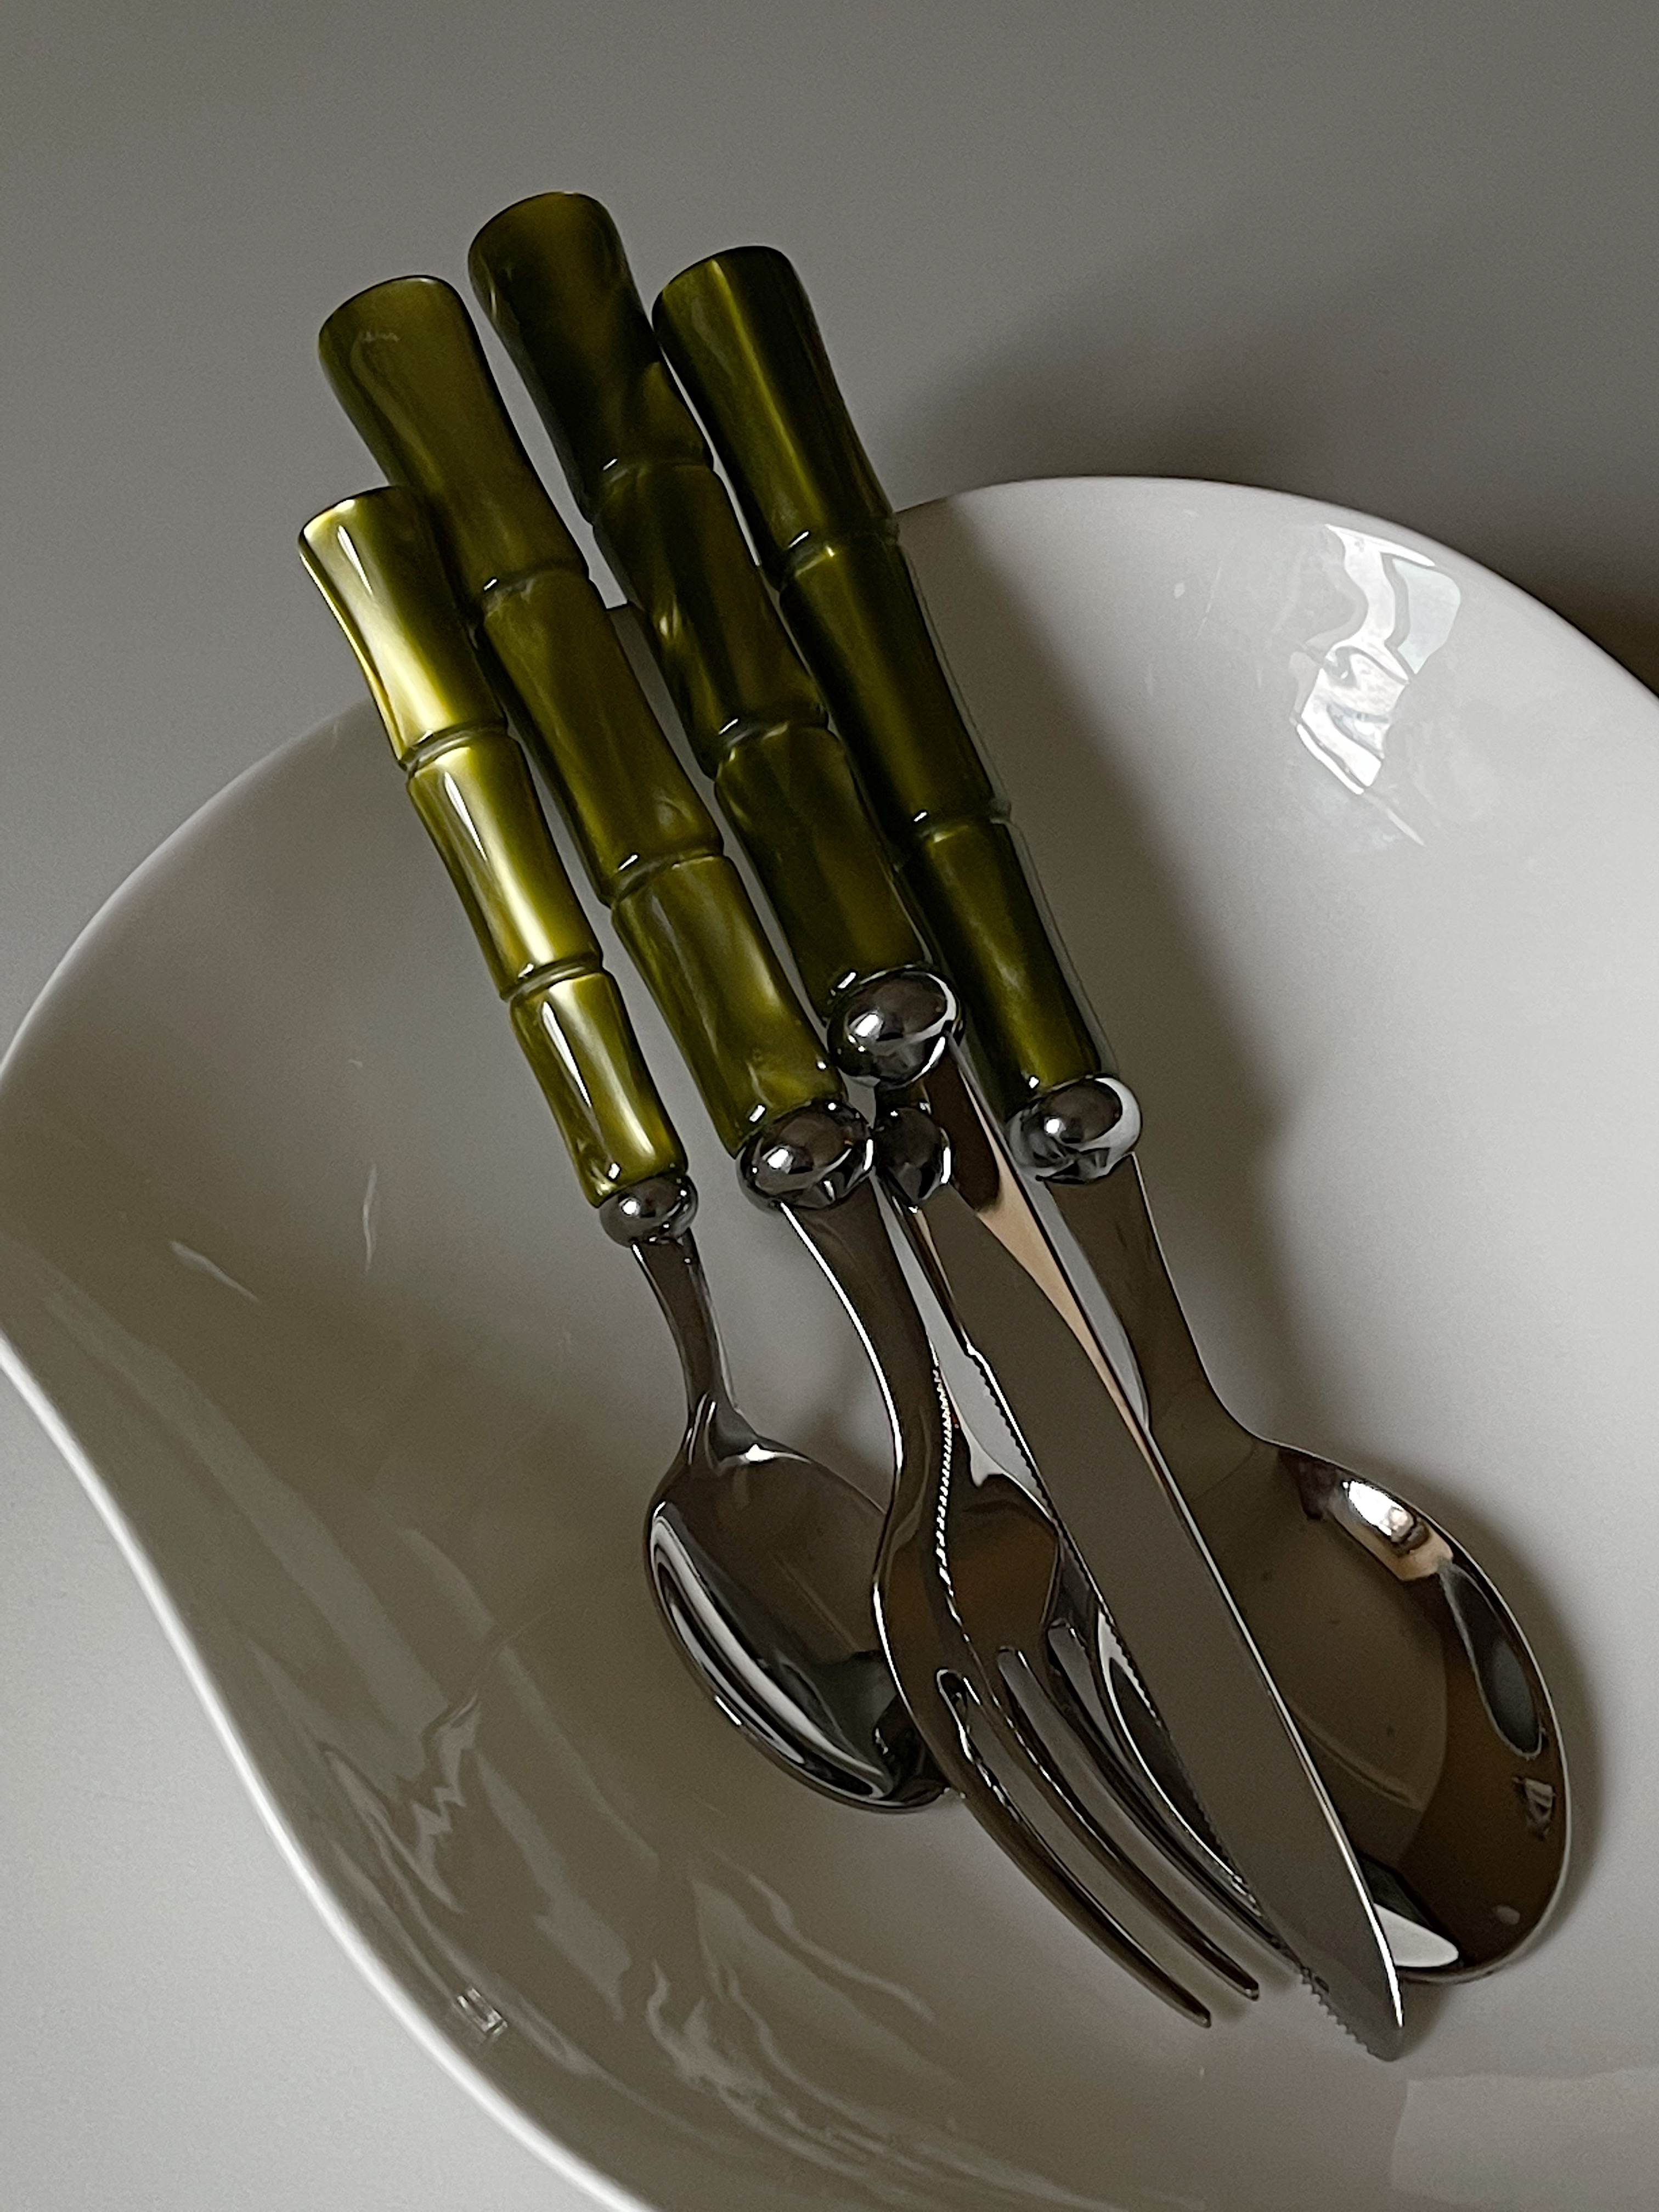 [YURUUI设计师]意大利Rivadossi橄榄绿/深绿色竹节刀叉勺西餐餐具-图1